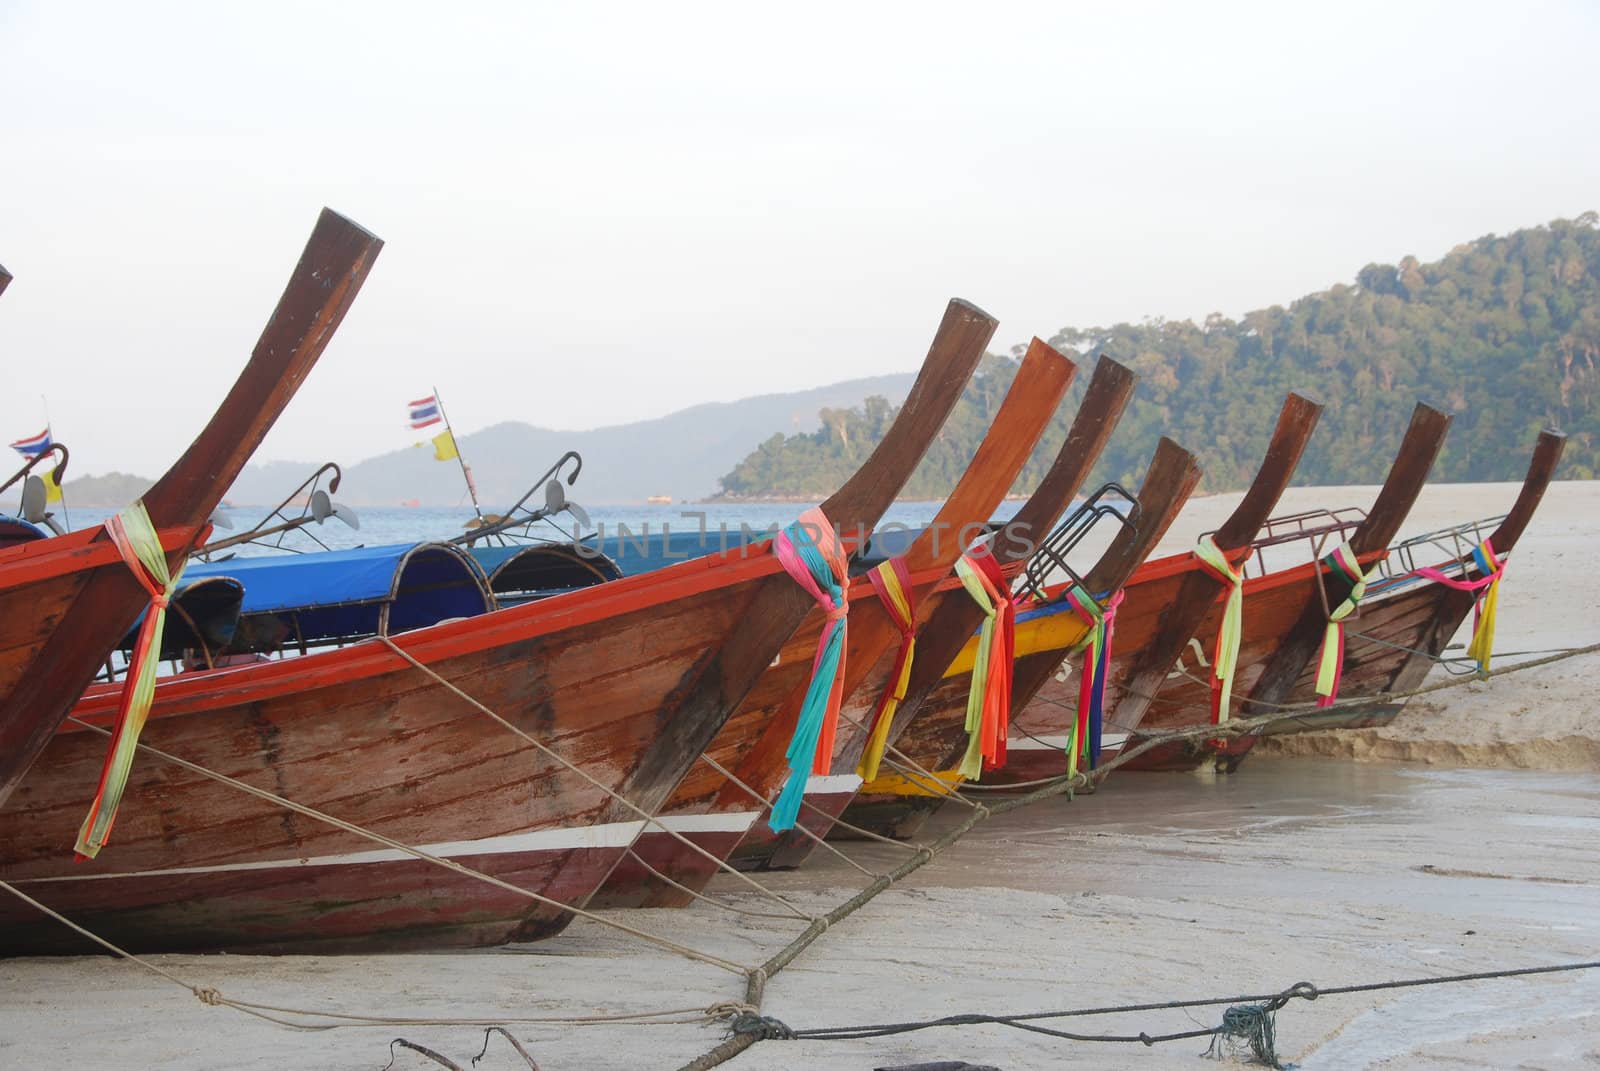 Longtail boats on a tropical beach